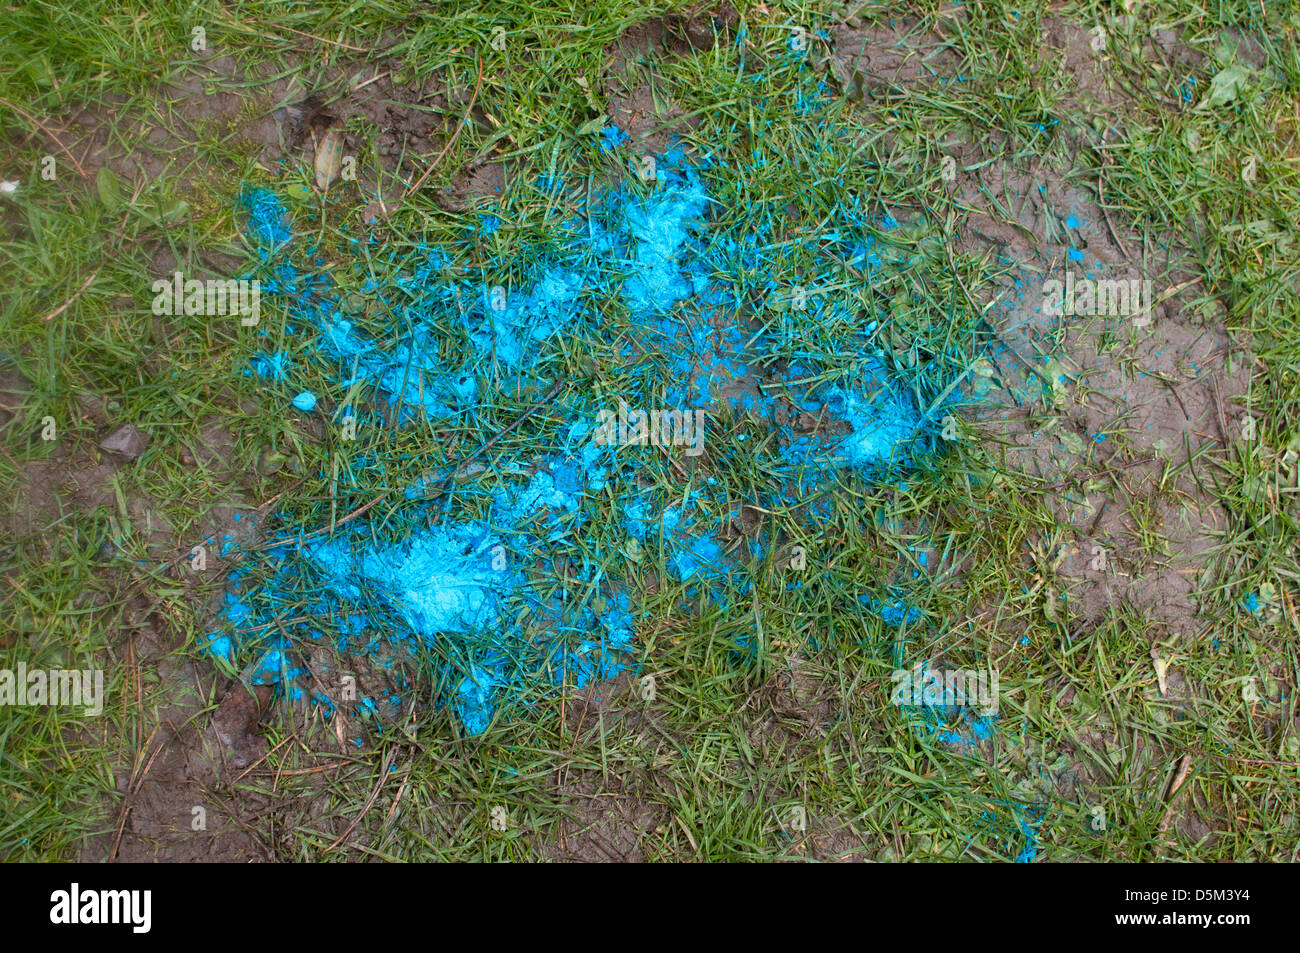 powder splattered on grass Stock Photo